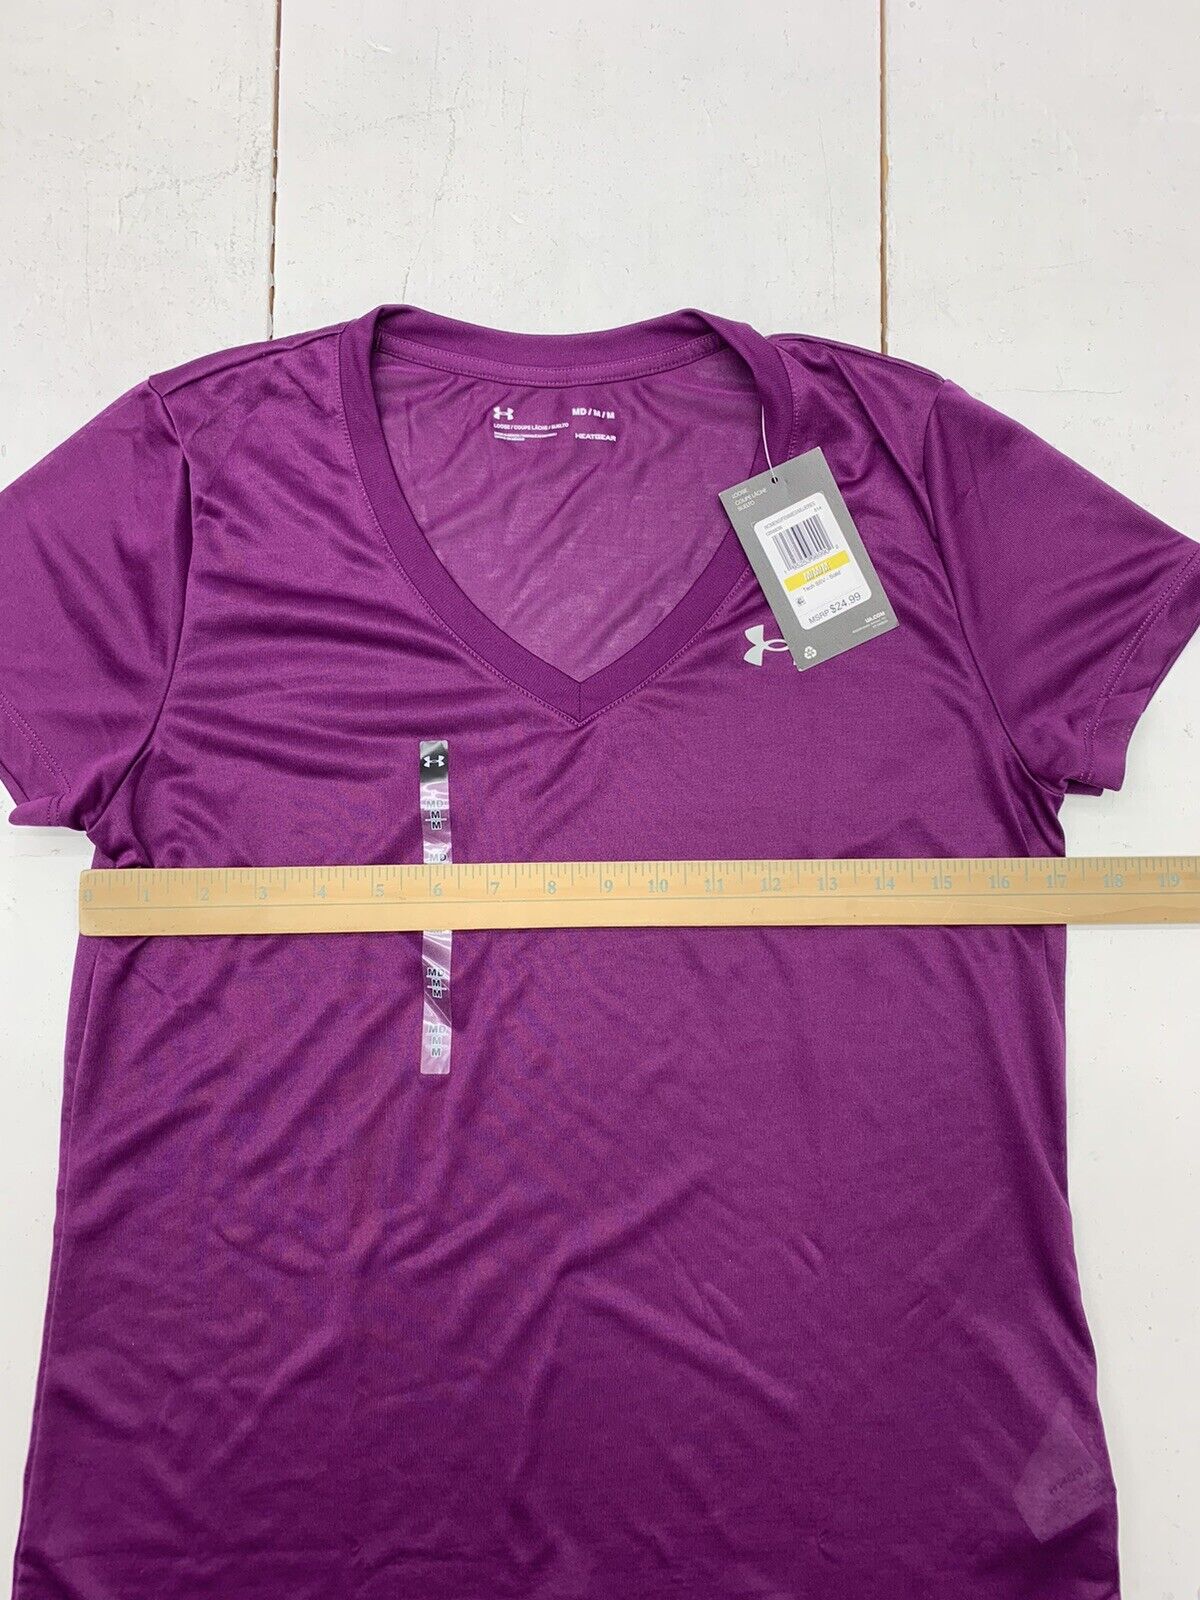 Under Armour Womens Purple Athletic Shirt Size Medium - beyond exchange